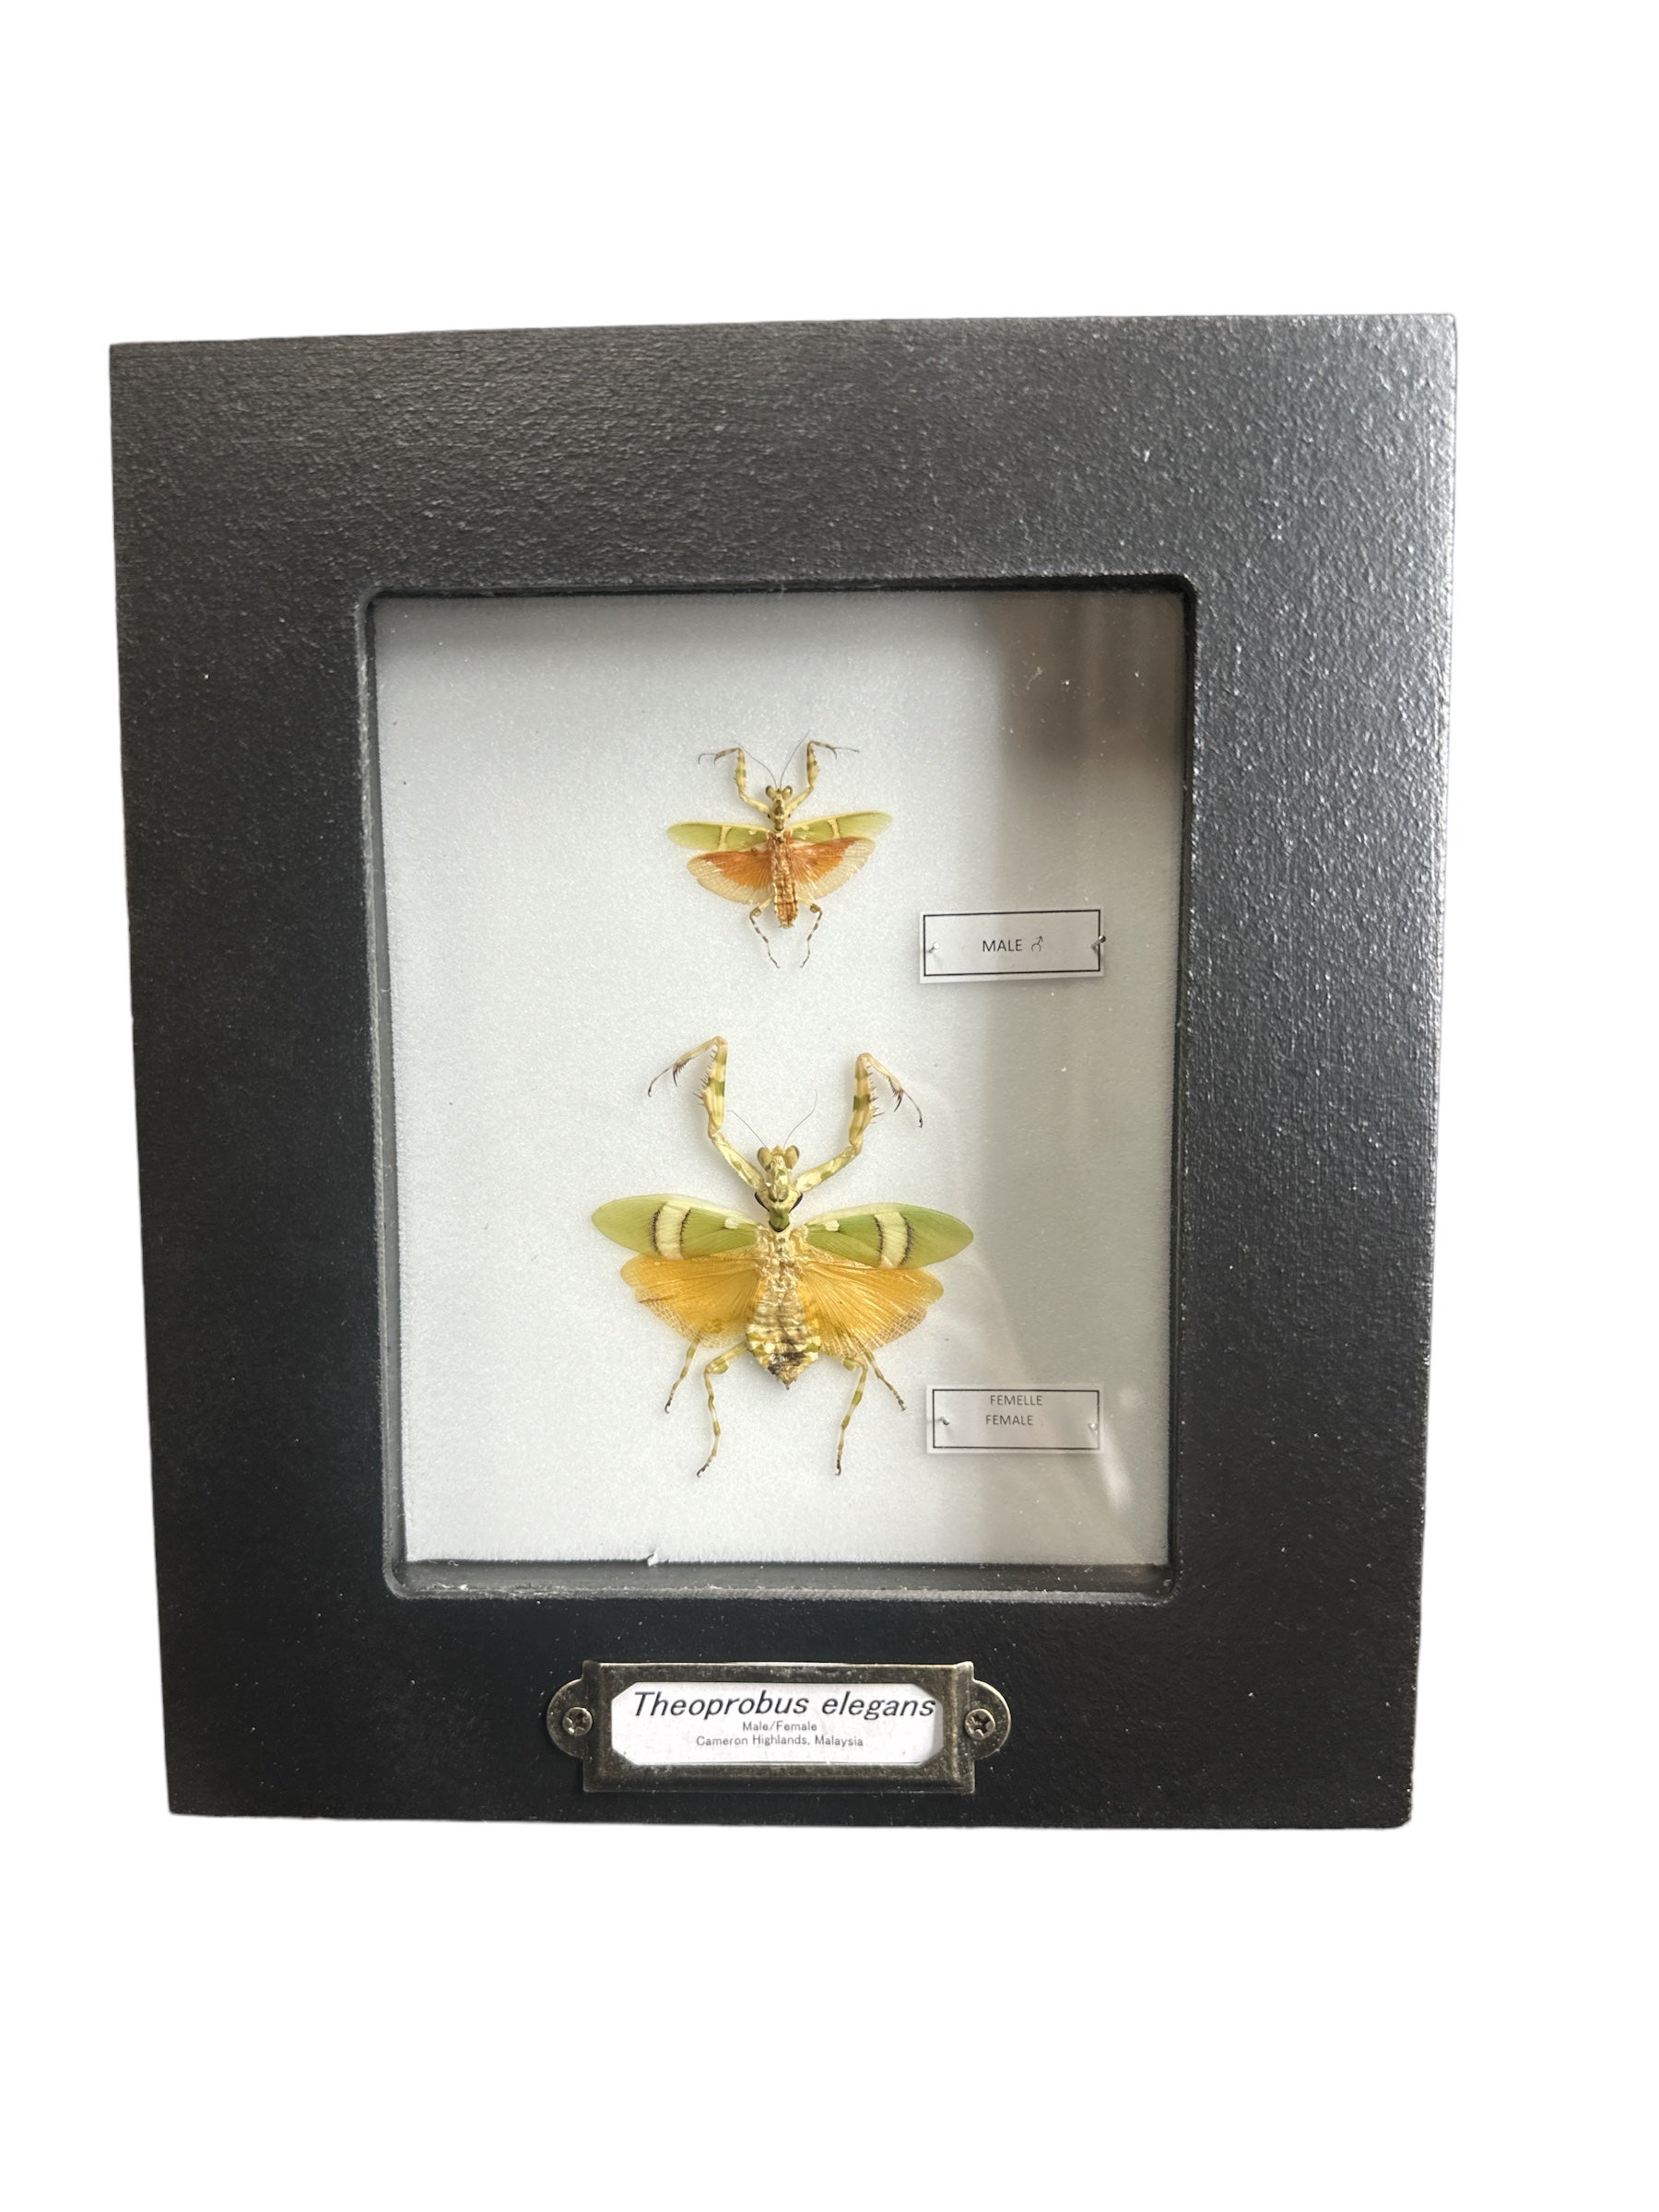 Banded Flower Mantis - Male + Female (Theopropus elegans) - 4x5" Frame